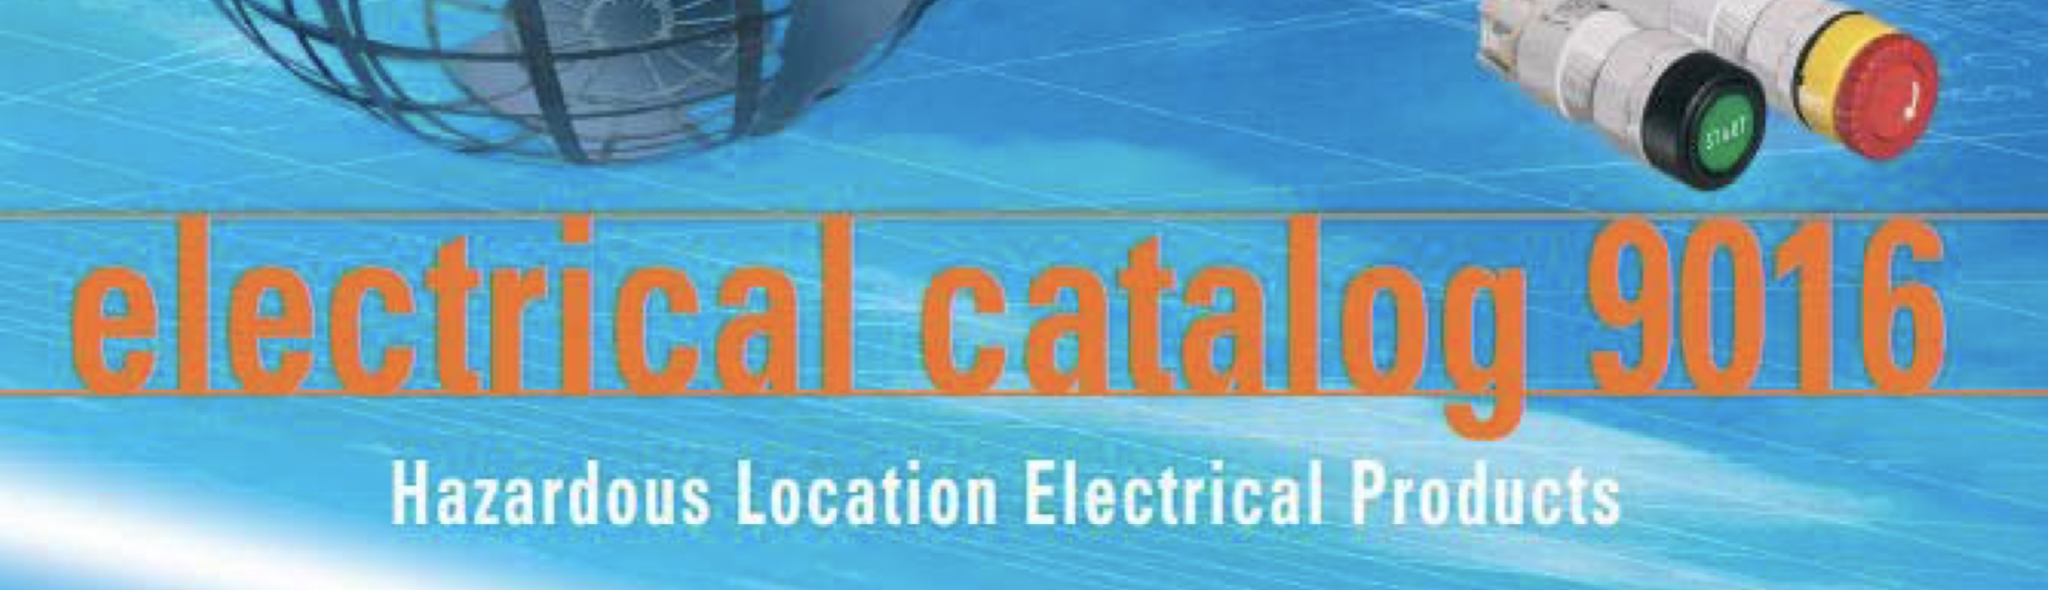 electrical catalog 9016